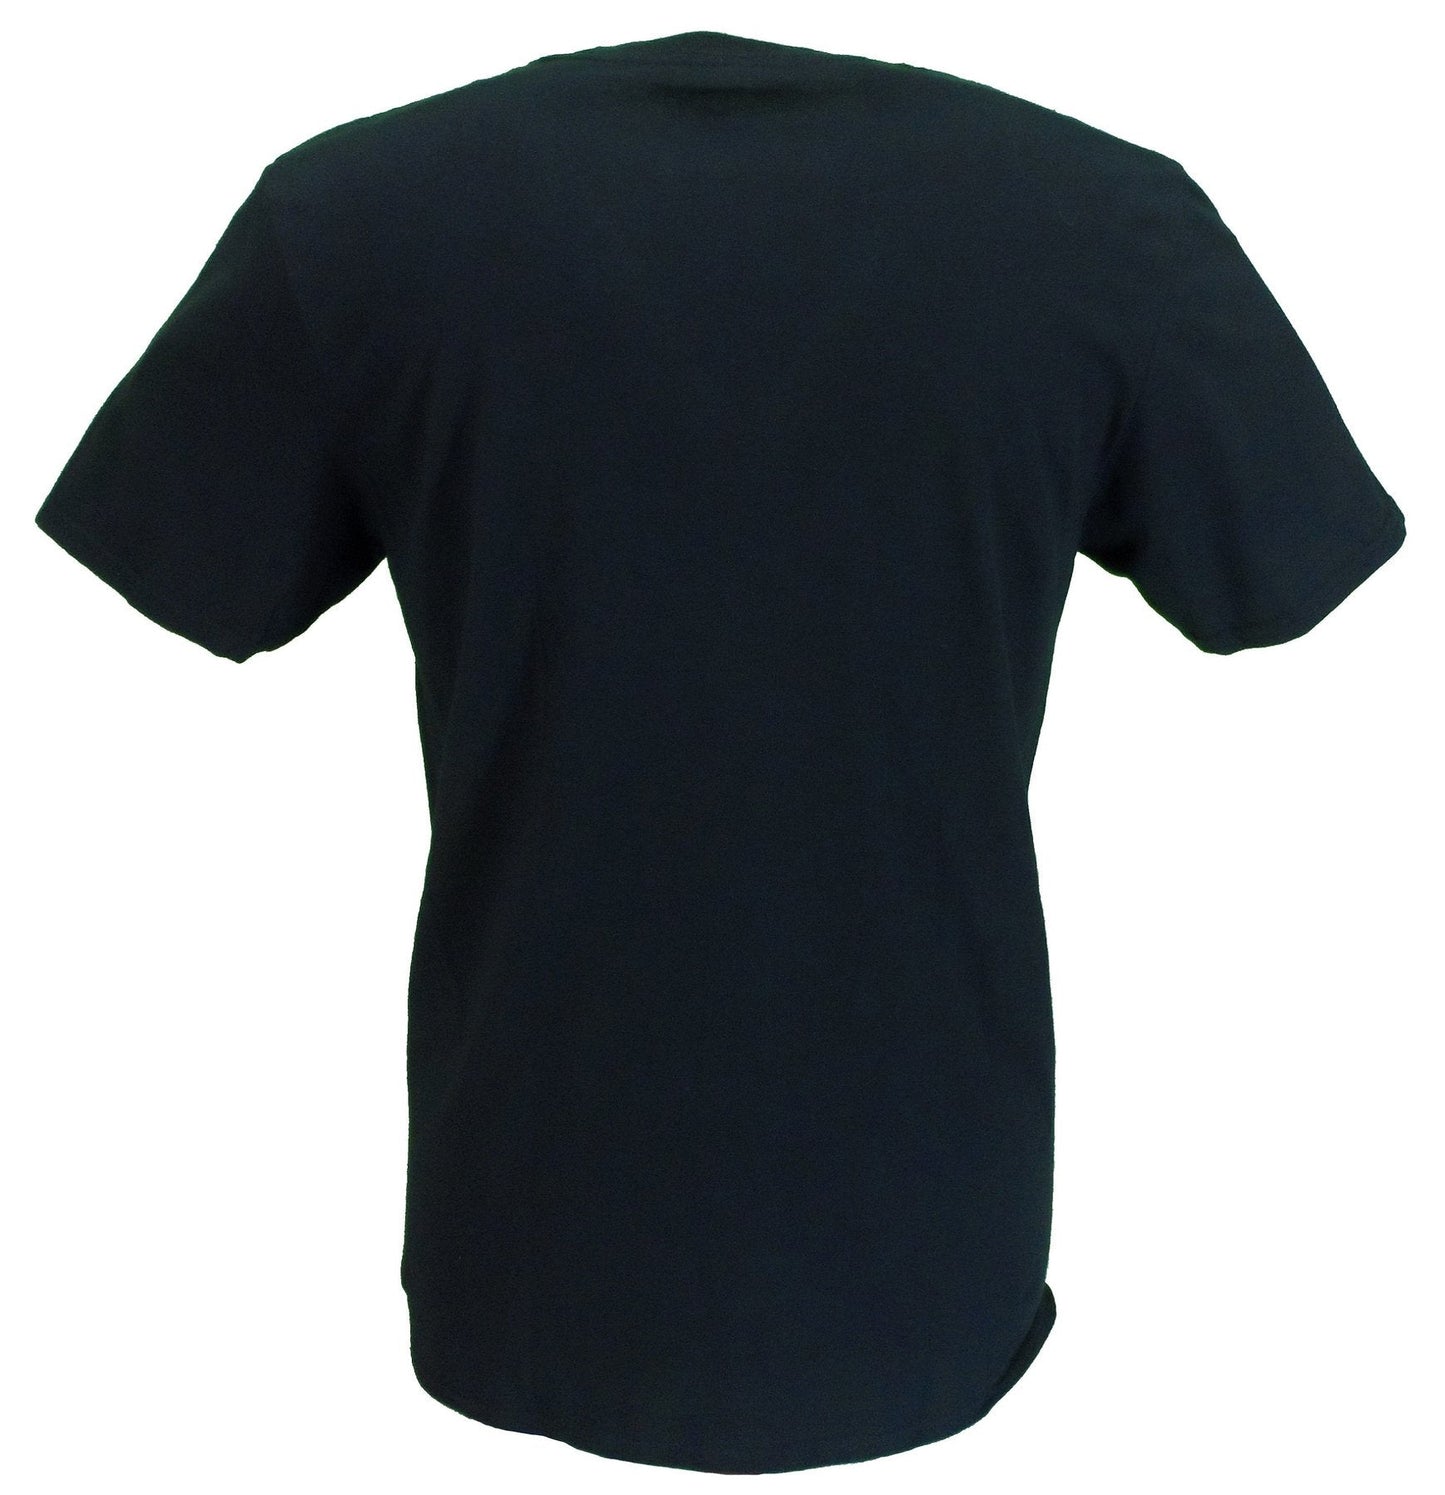 Offiziell Lizenziertes Peter Tosh Lightning-Logo-T-Shirt Für Herren